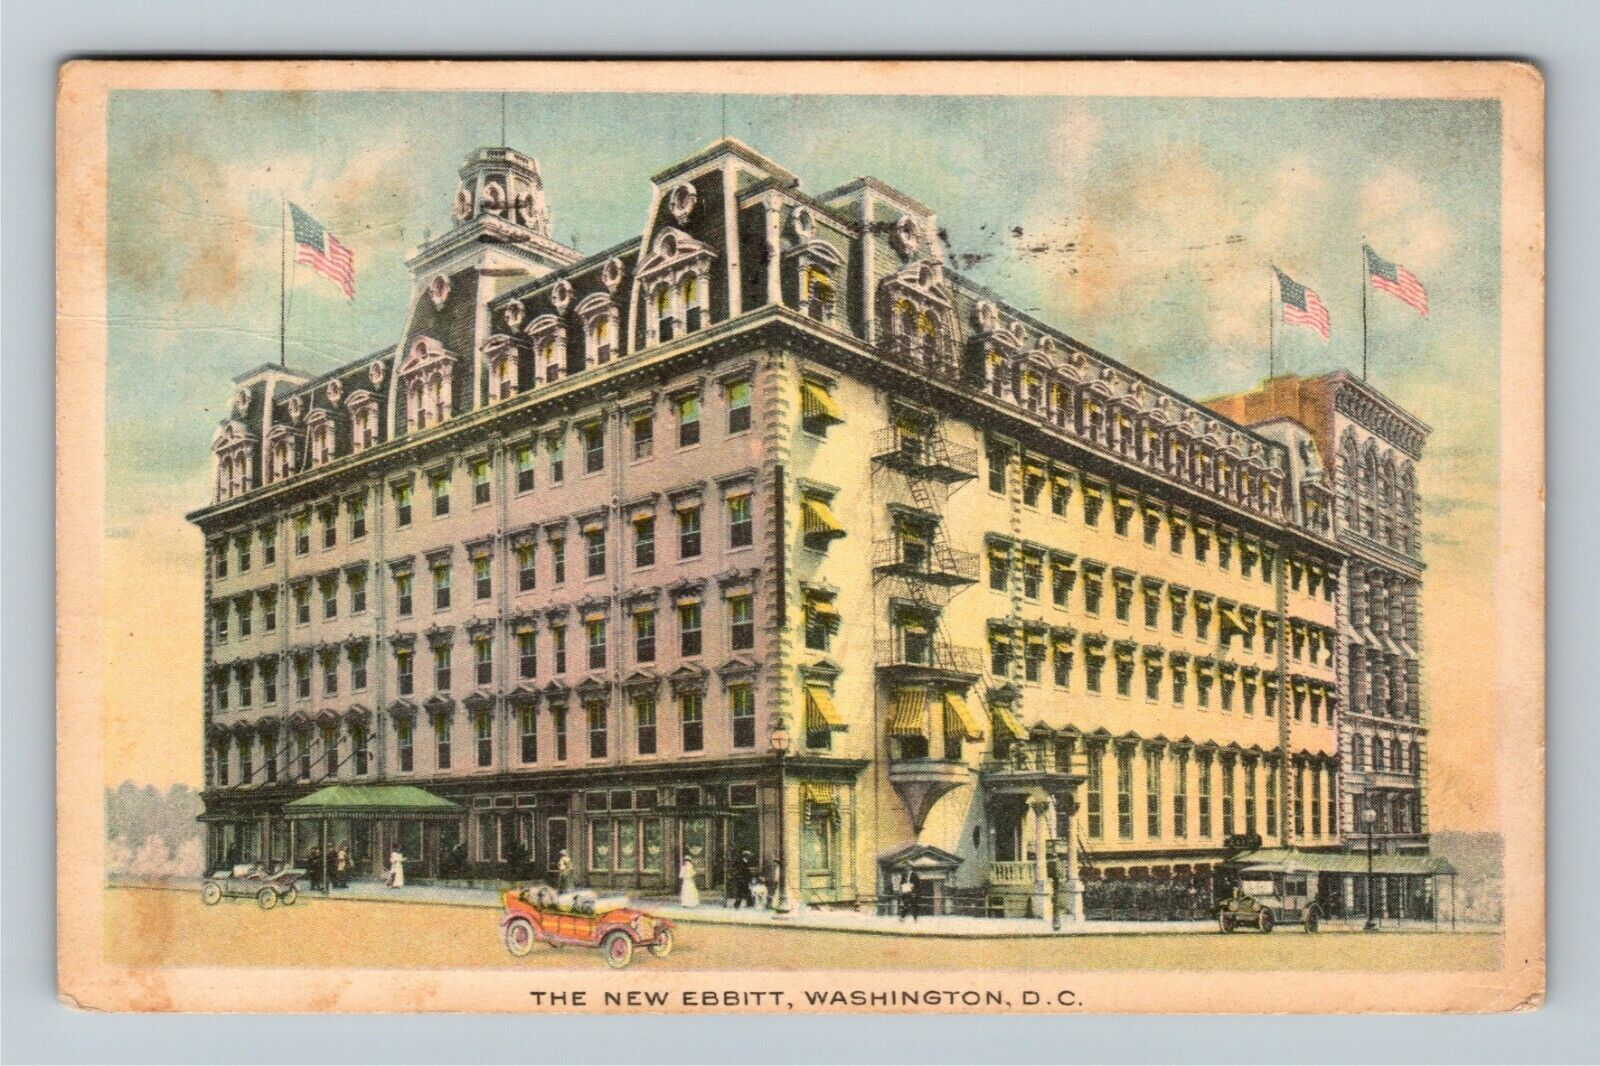 Washington D.C. -The New Ebbitt Hotel, Demolished in 1925 Vintage Postcard